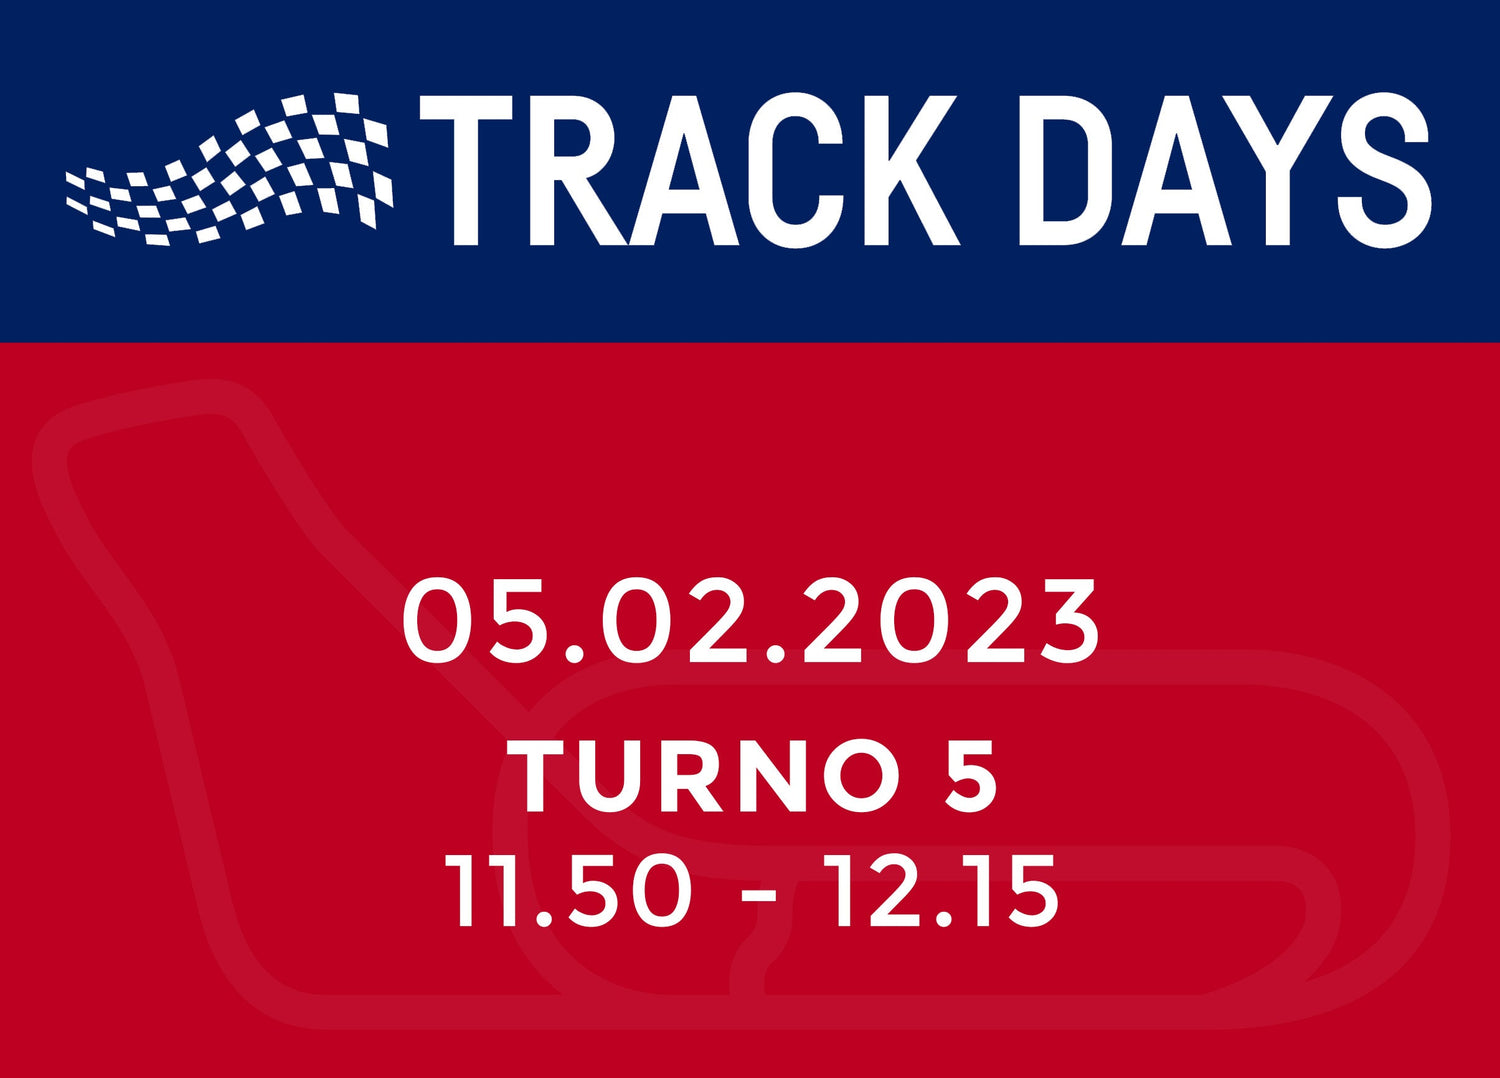 TRACK DAYS 05.02.23 TURNO 5